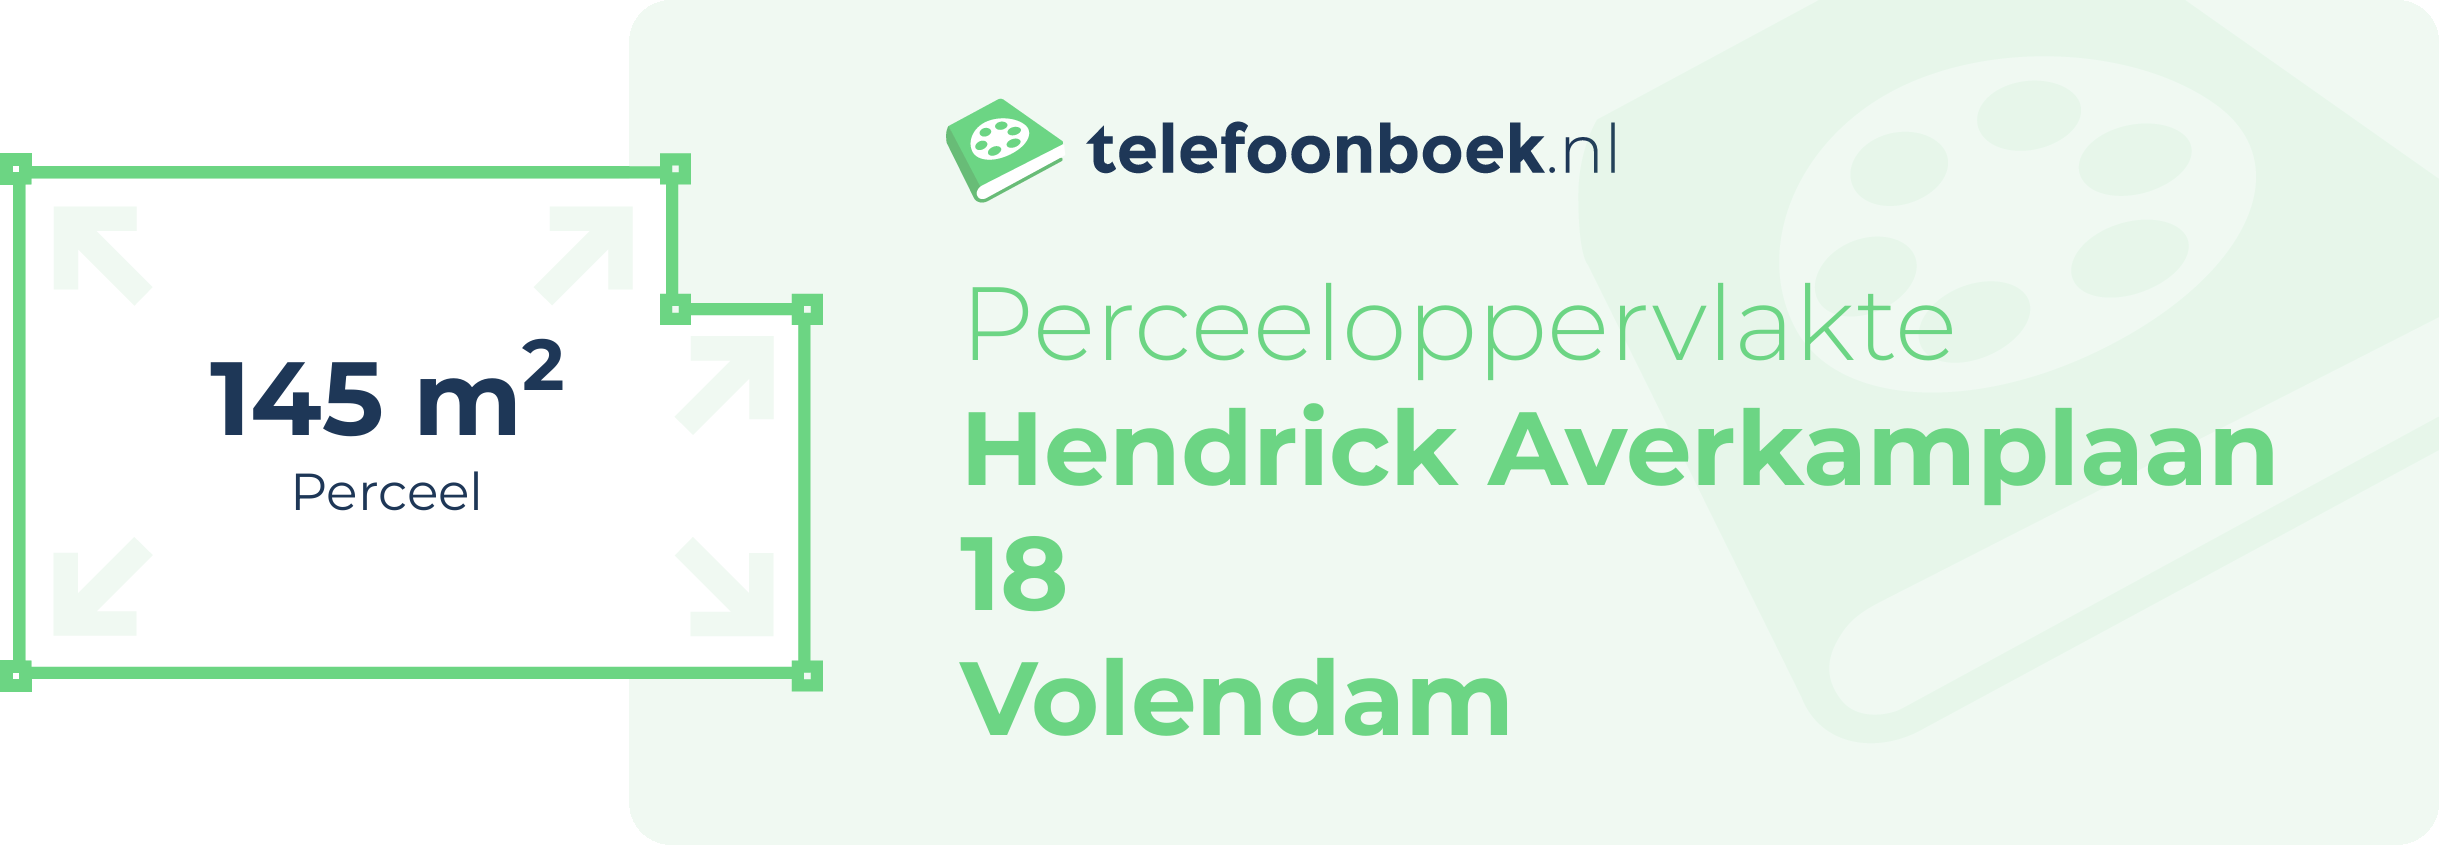 Perceeloppervlakte Hendrick Averkamplaan 18 Volendam